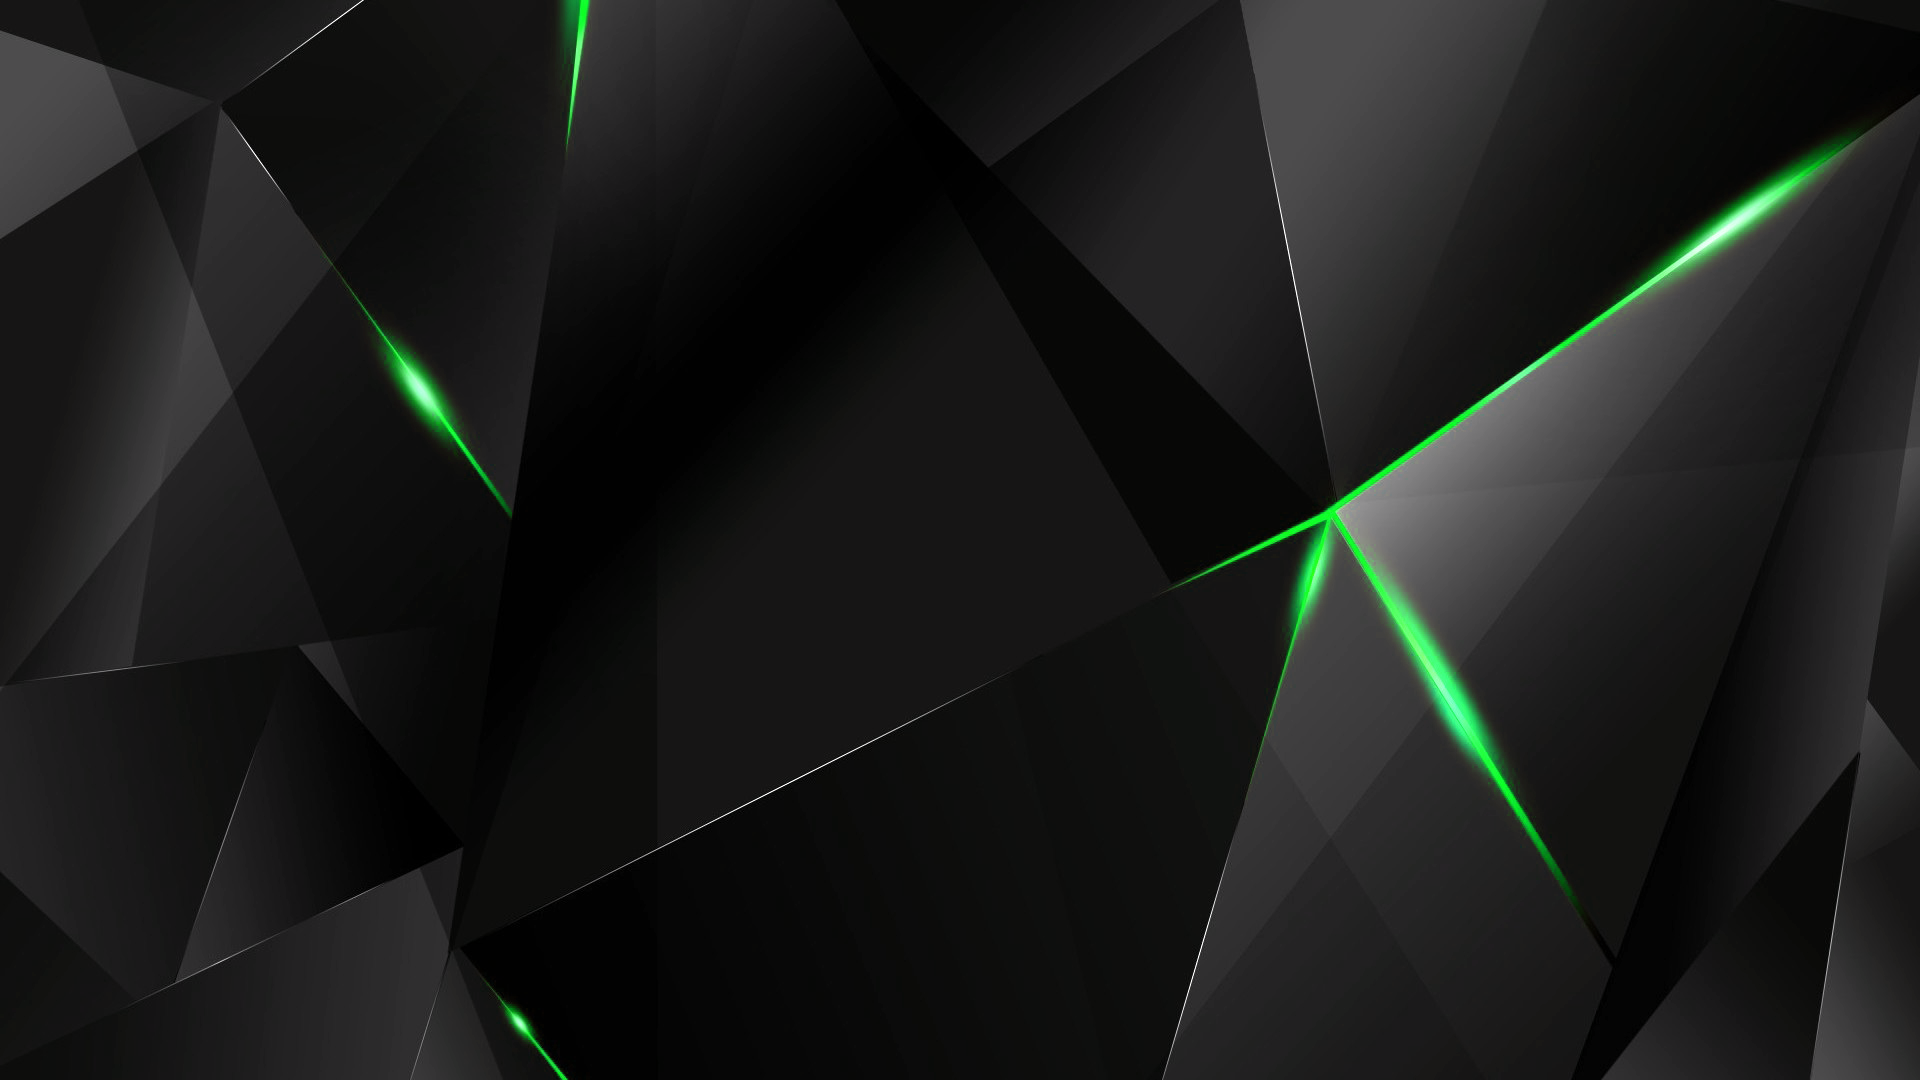 Wallpapers - Green Abstract Polygons (Black BG) by kaminohunter on  DeviantArt